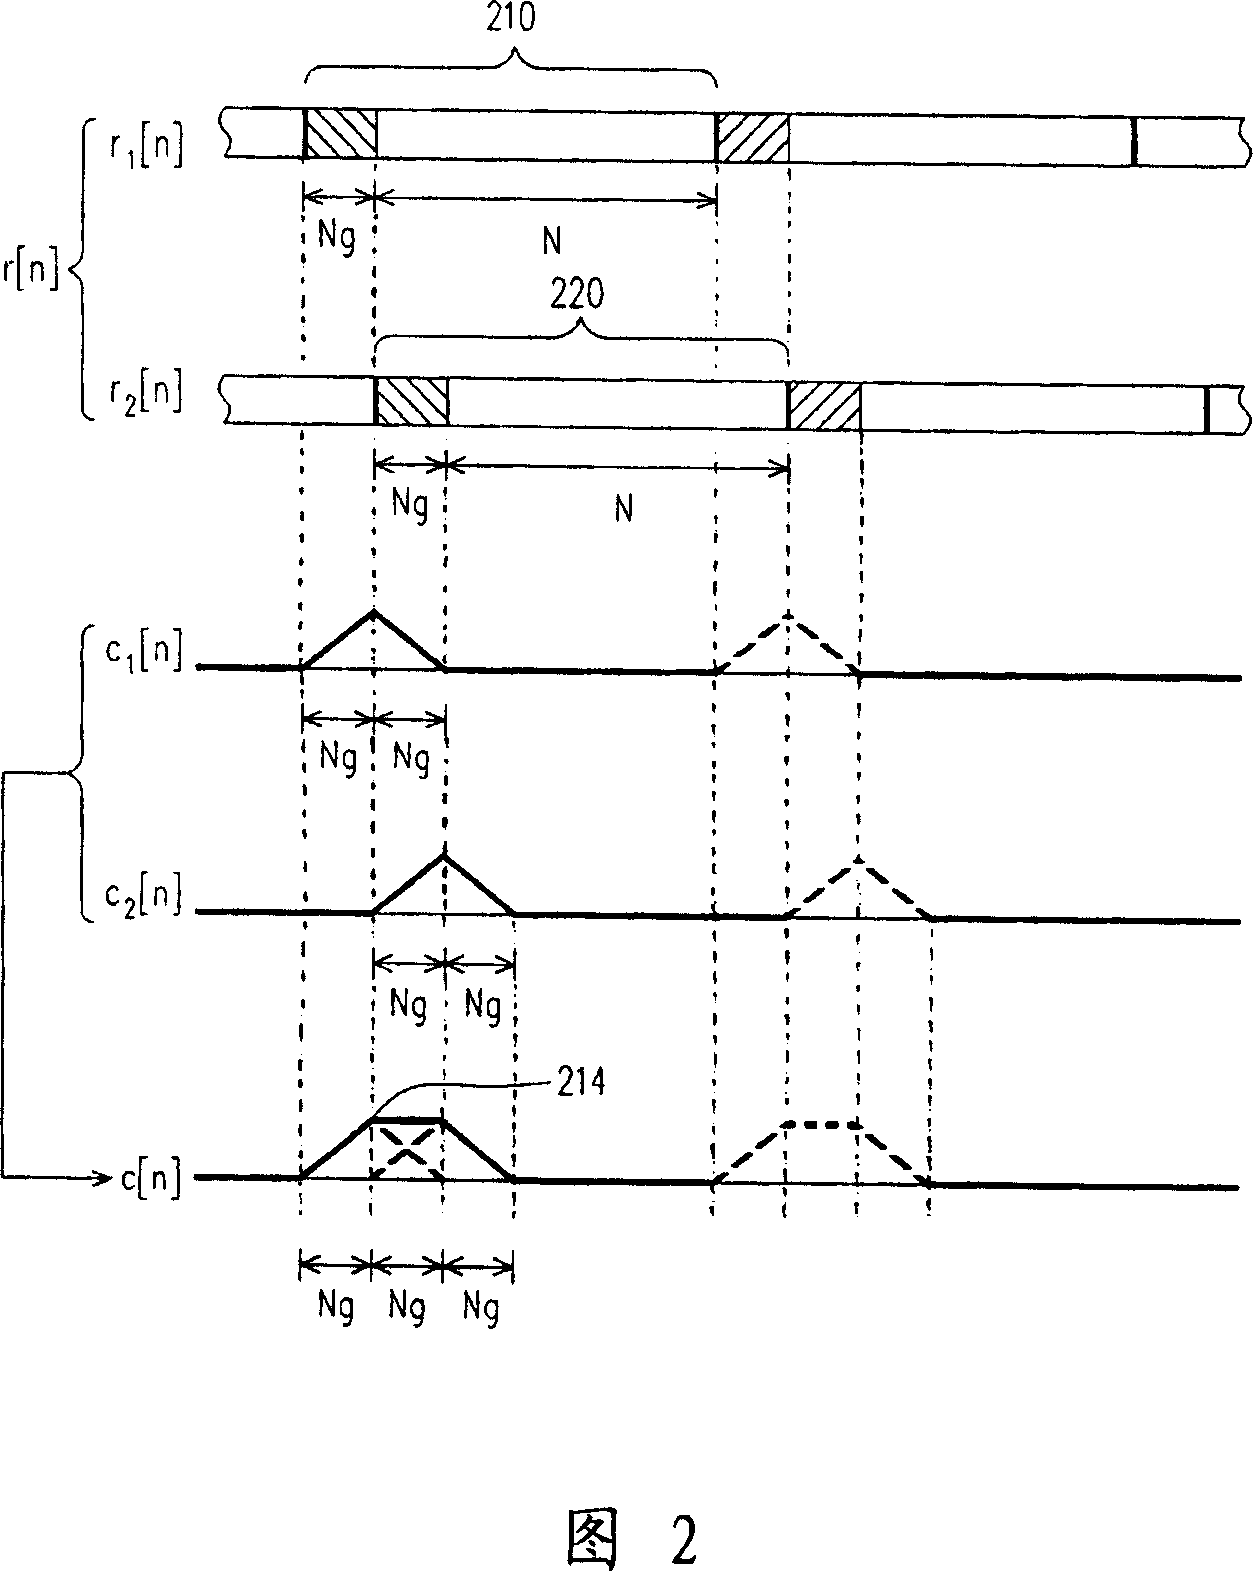 Symbol timing synchronizing method and apparatus using the same method